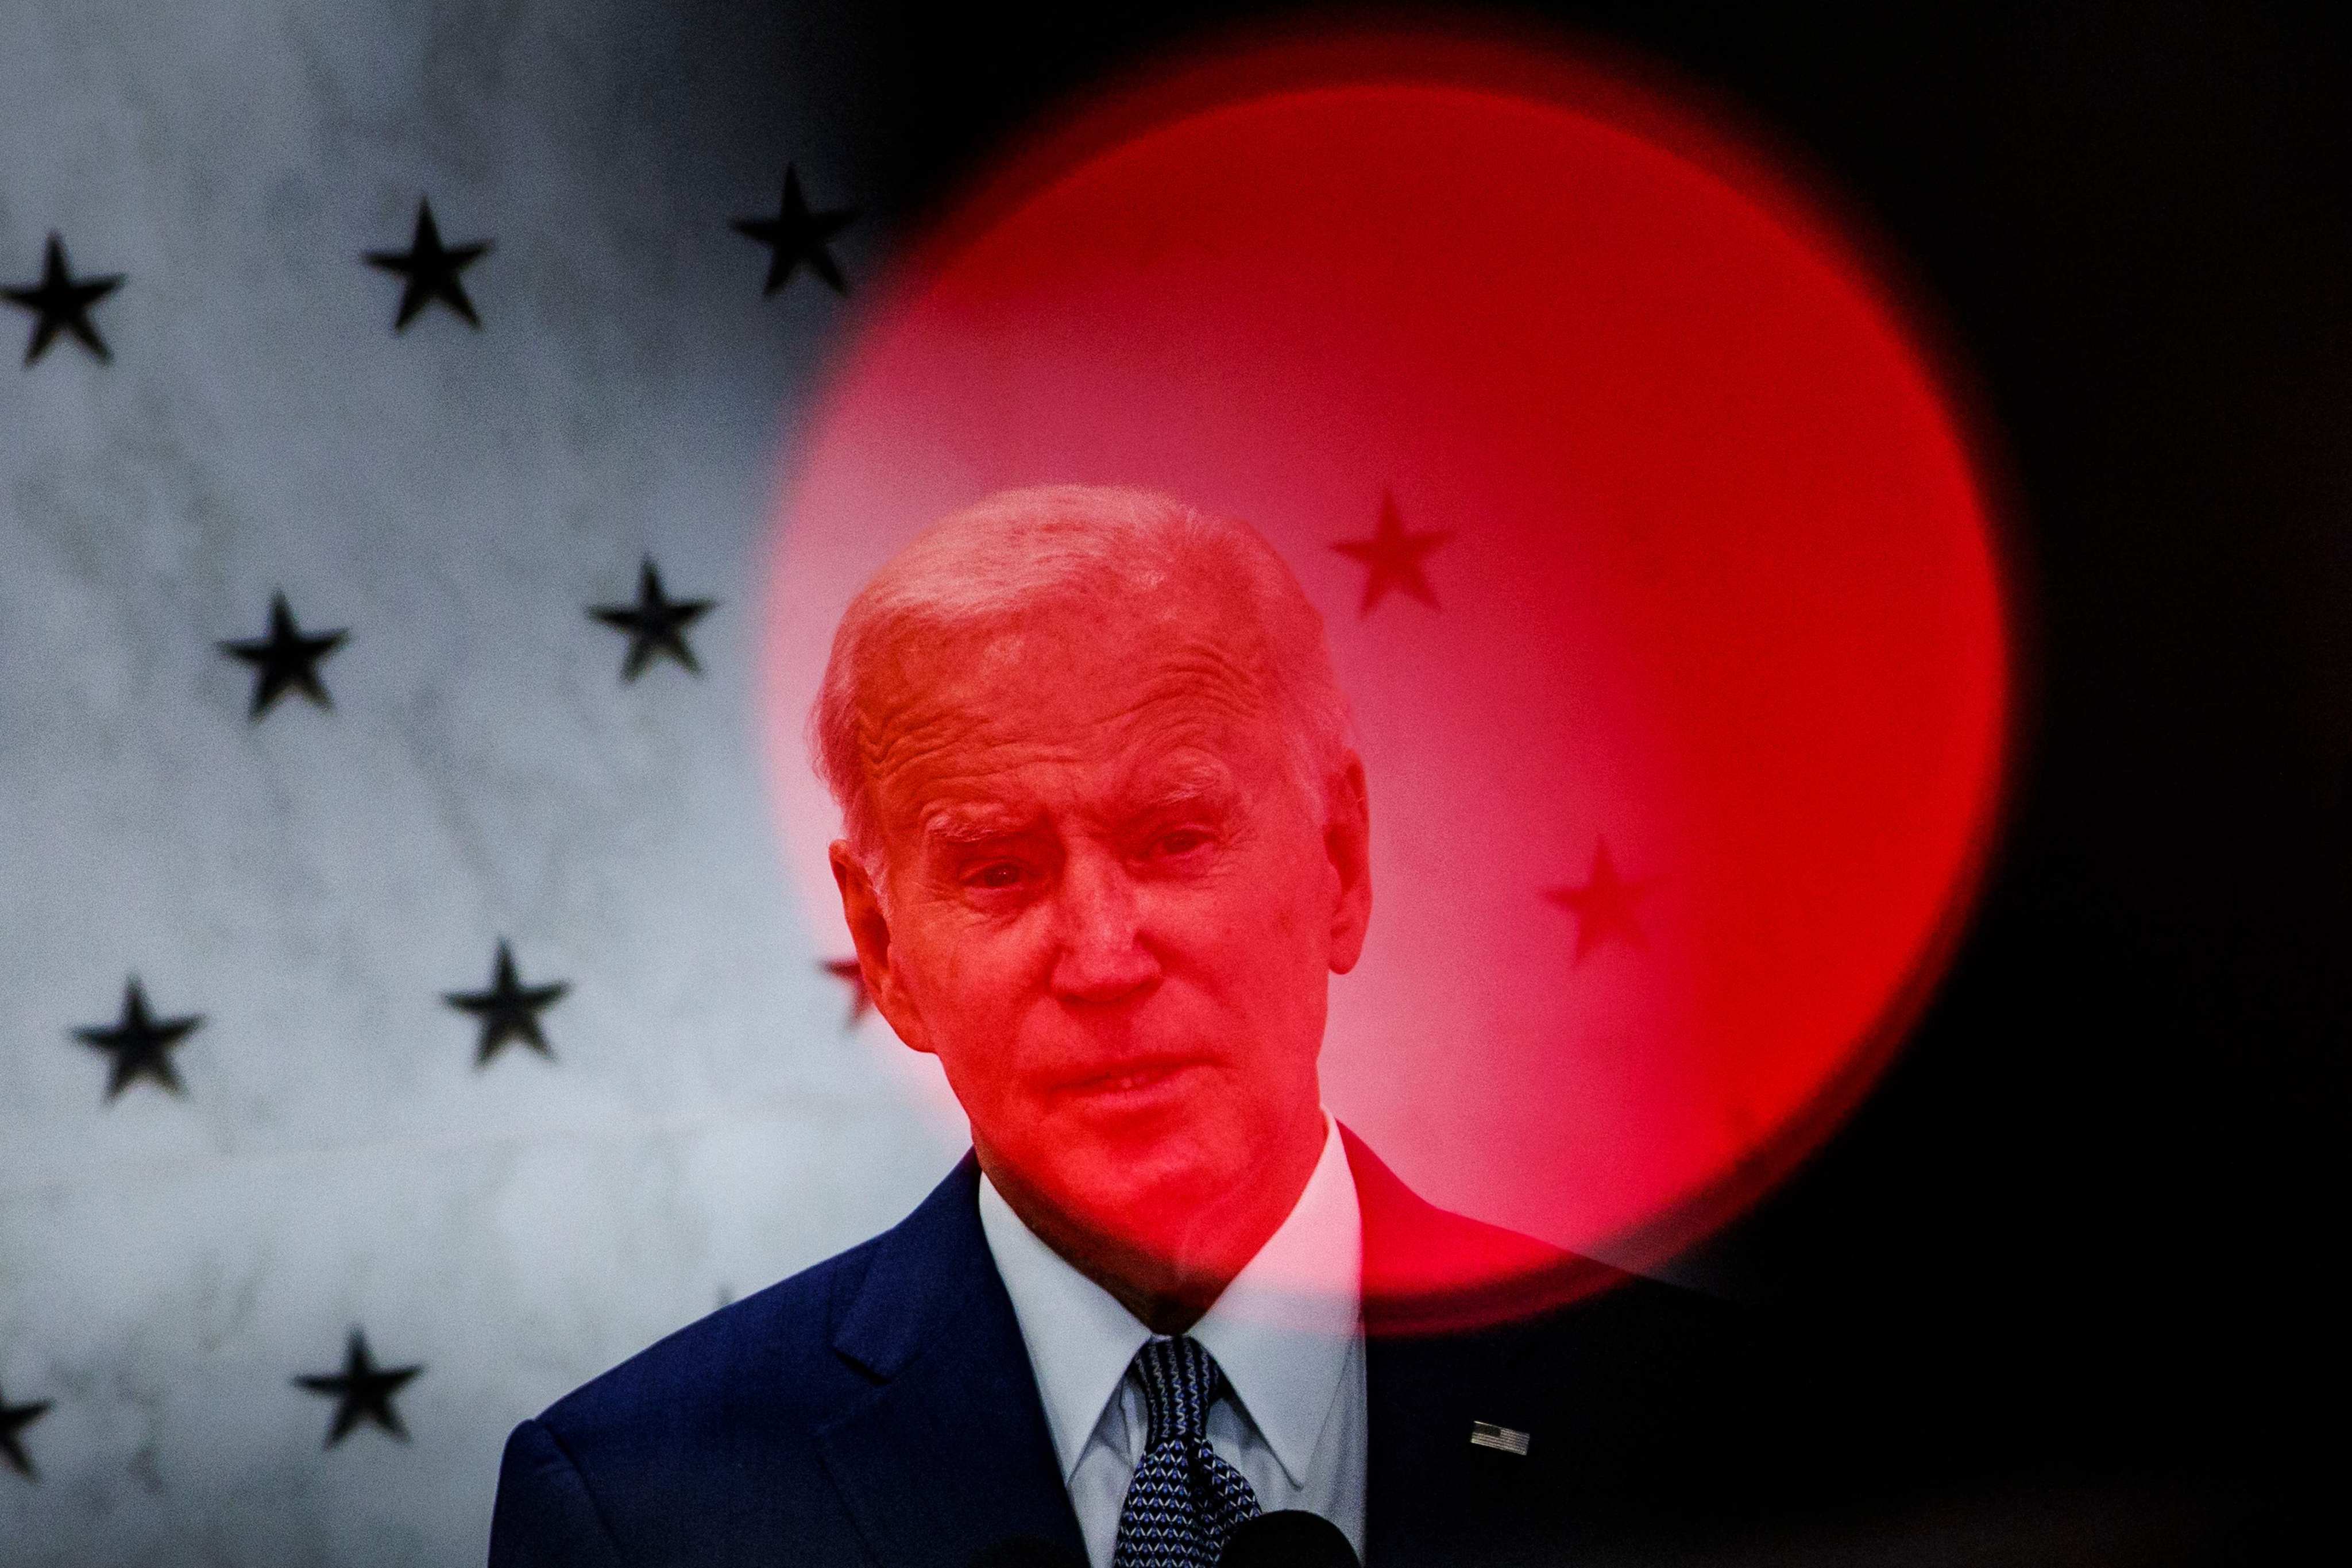 Not so long ago US President Joe Biden promised to make Saudi Arabia a ‘pariah’ state. Now he’s seeking to ‘recalibrate’ ties. Photo: AFP